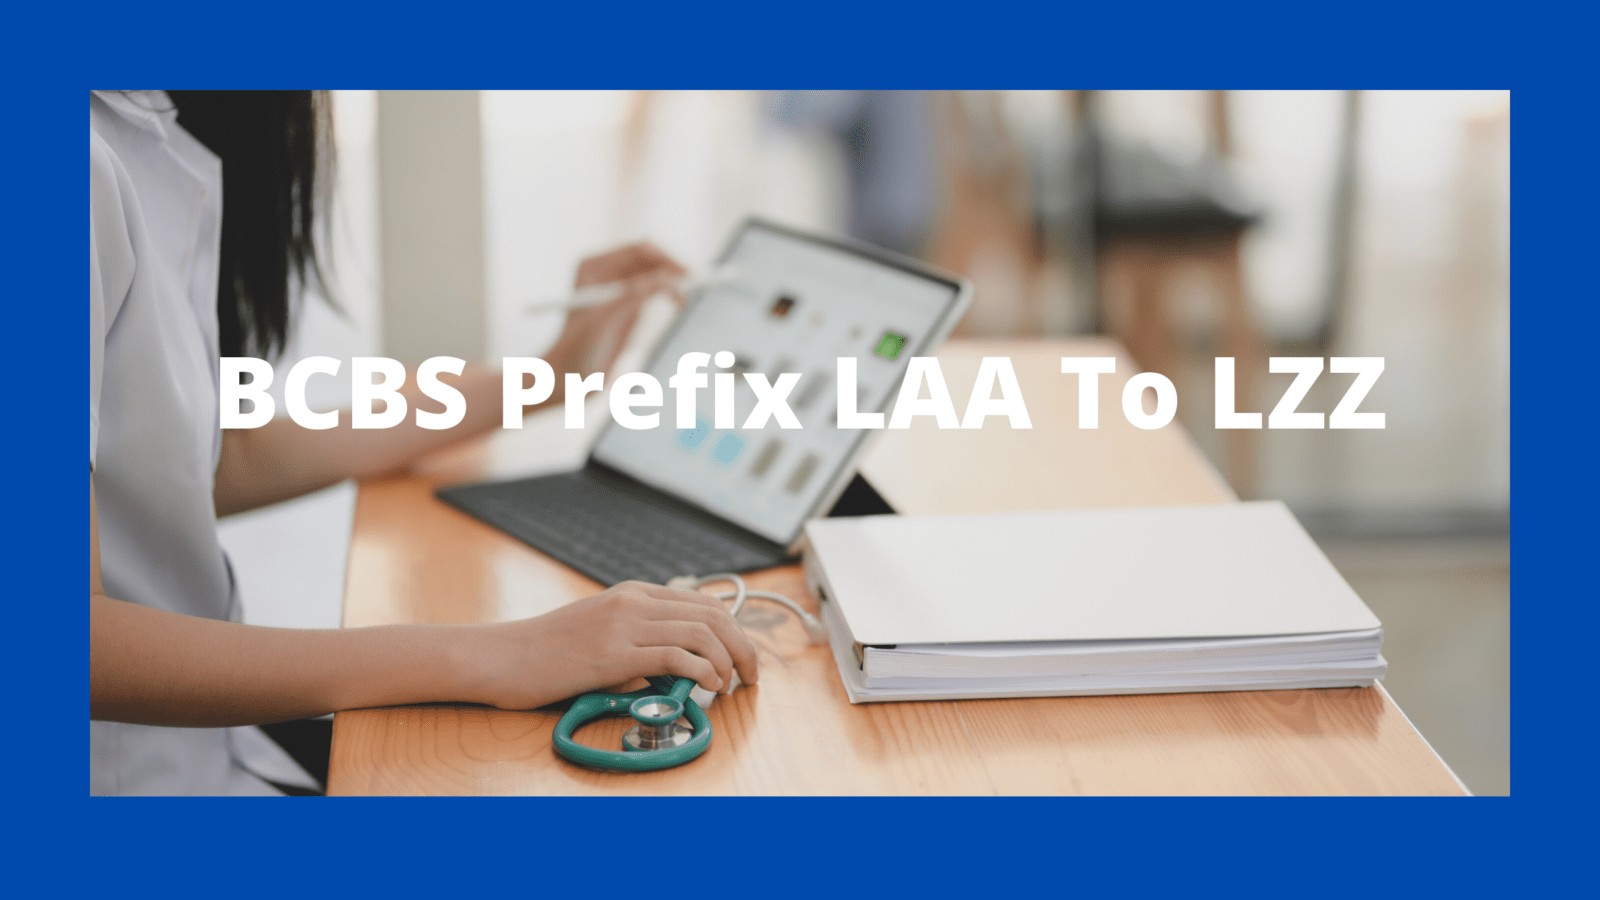 bcbs prefix list laa to lzz